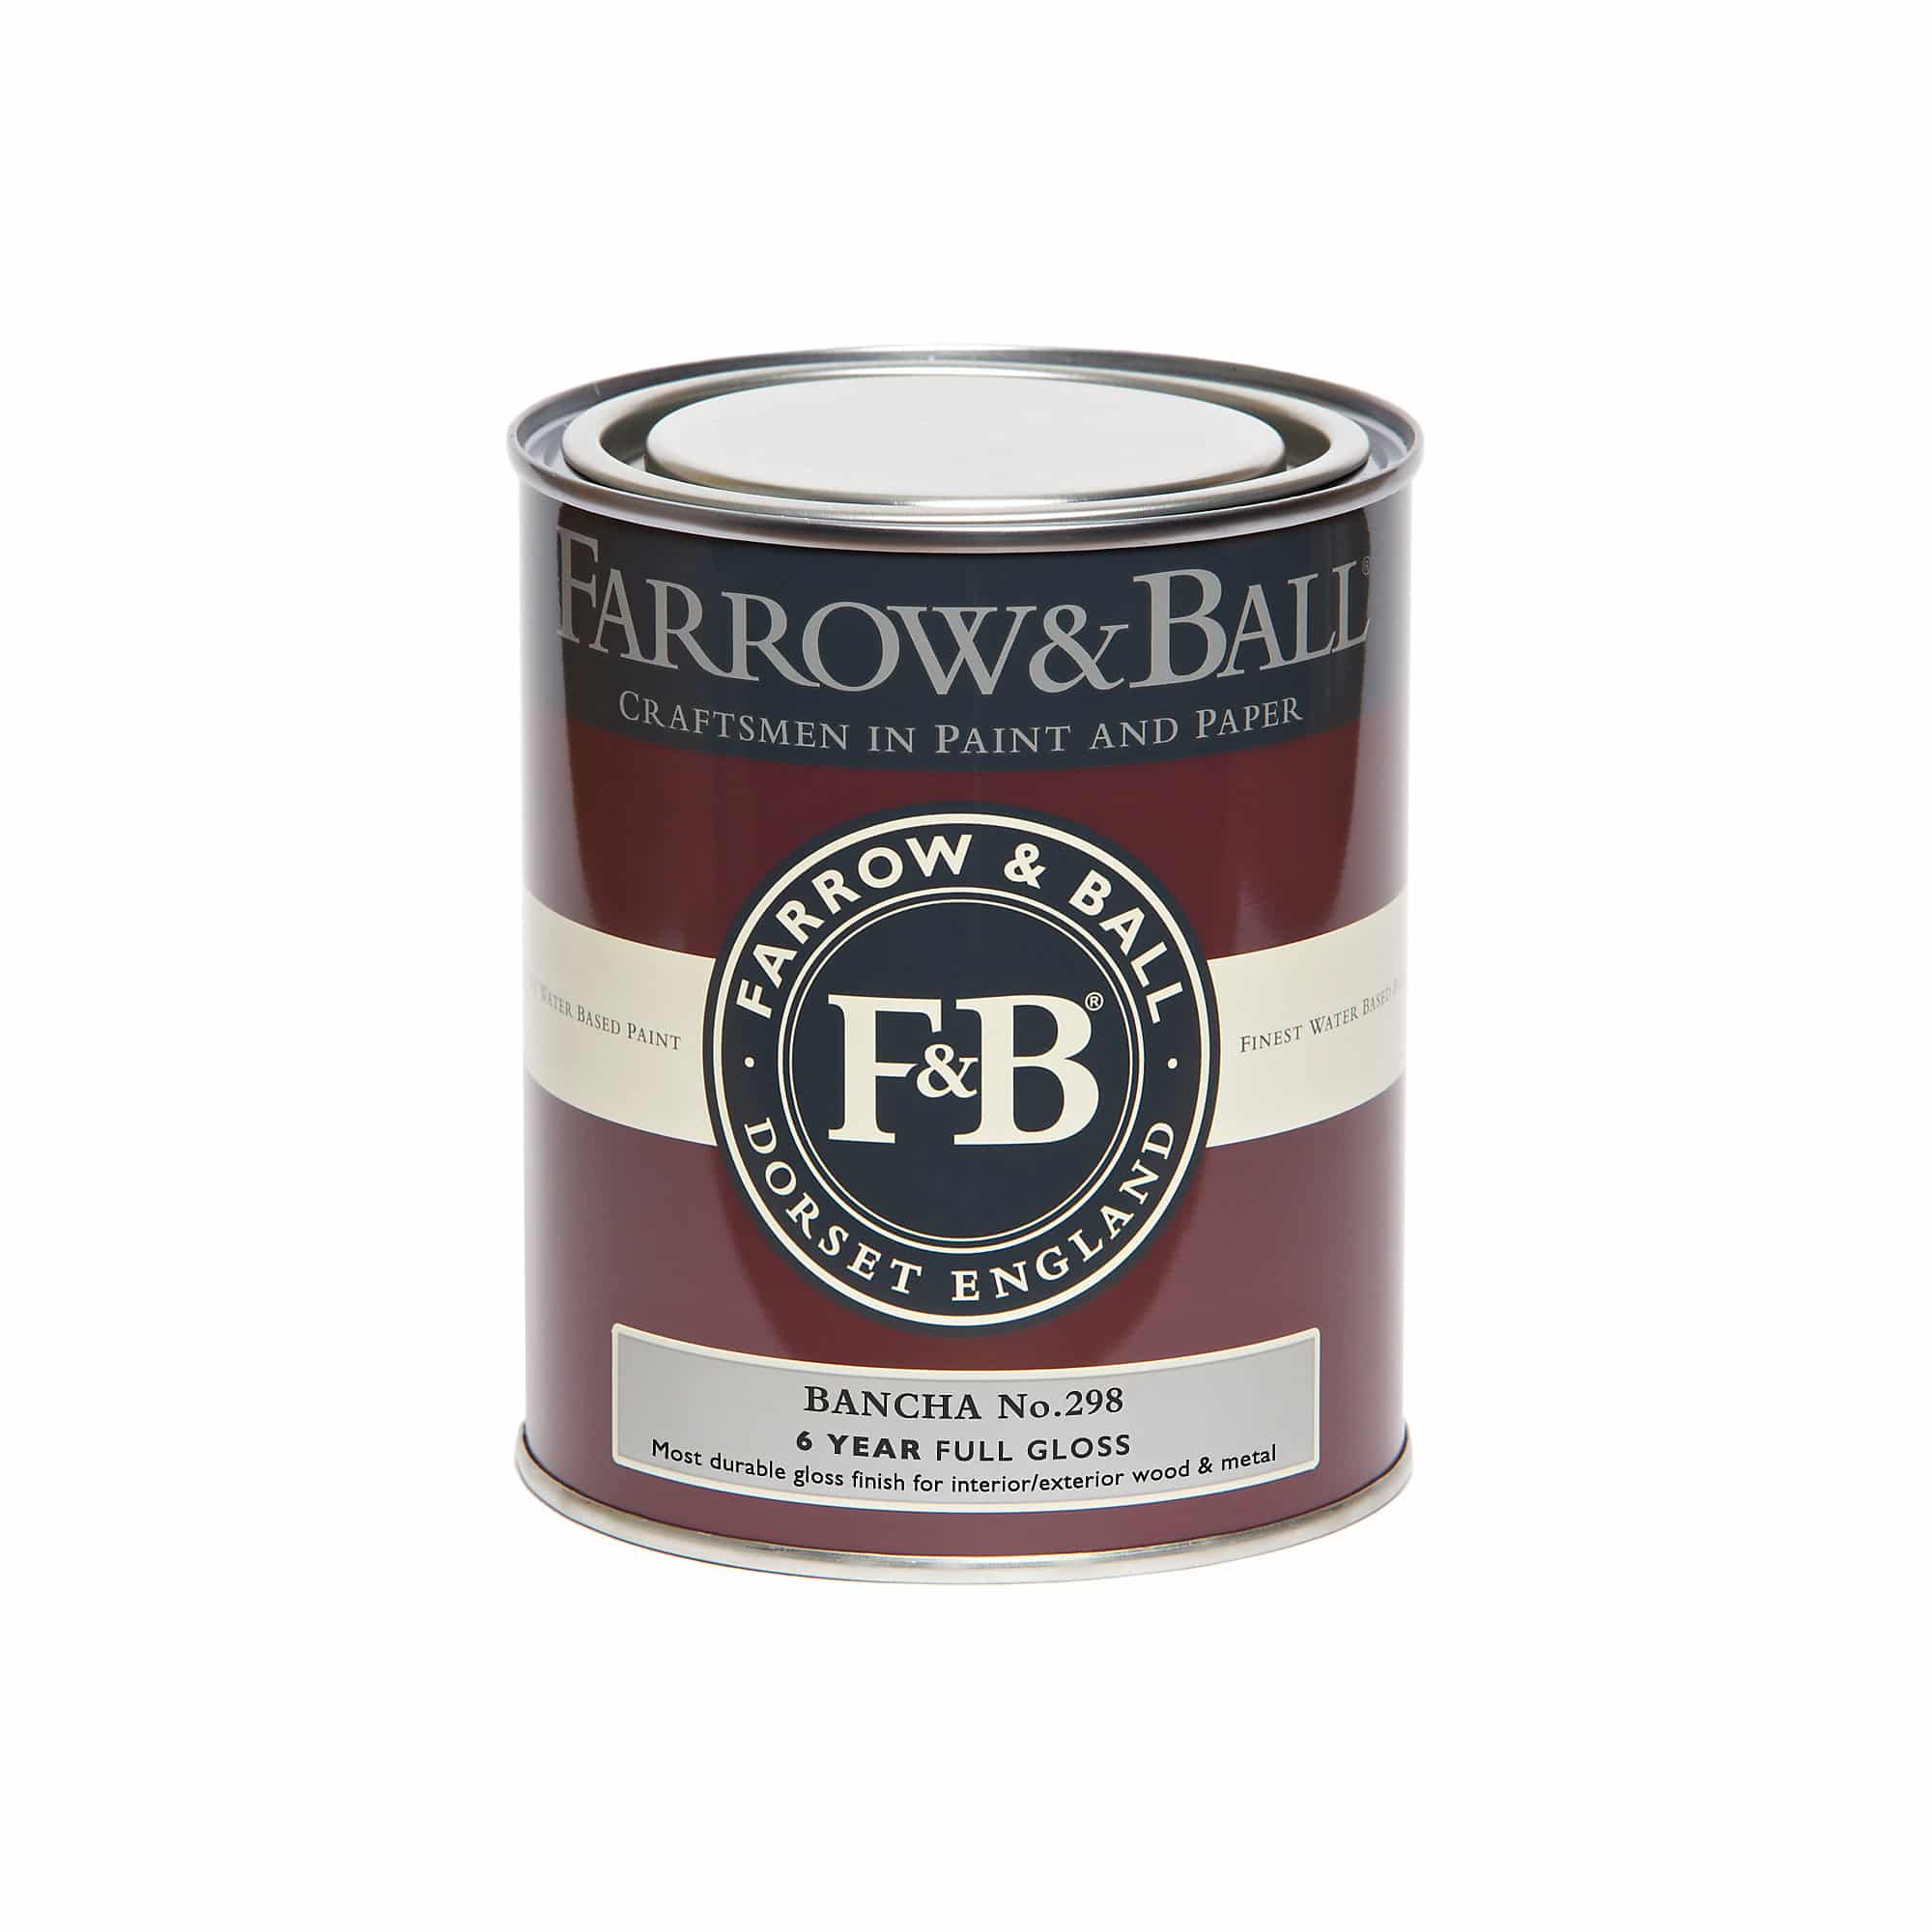 Farrow & Ball Bancha Gloss Metal & wood paint, 750ml-7985